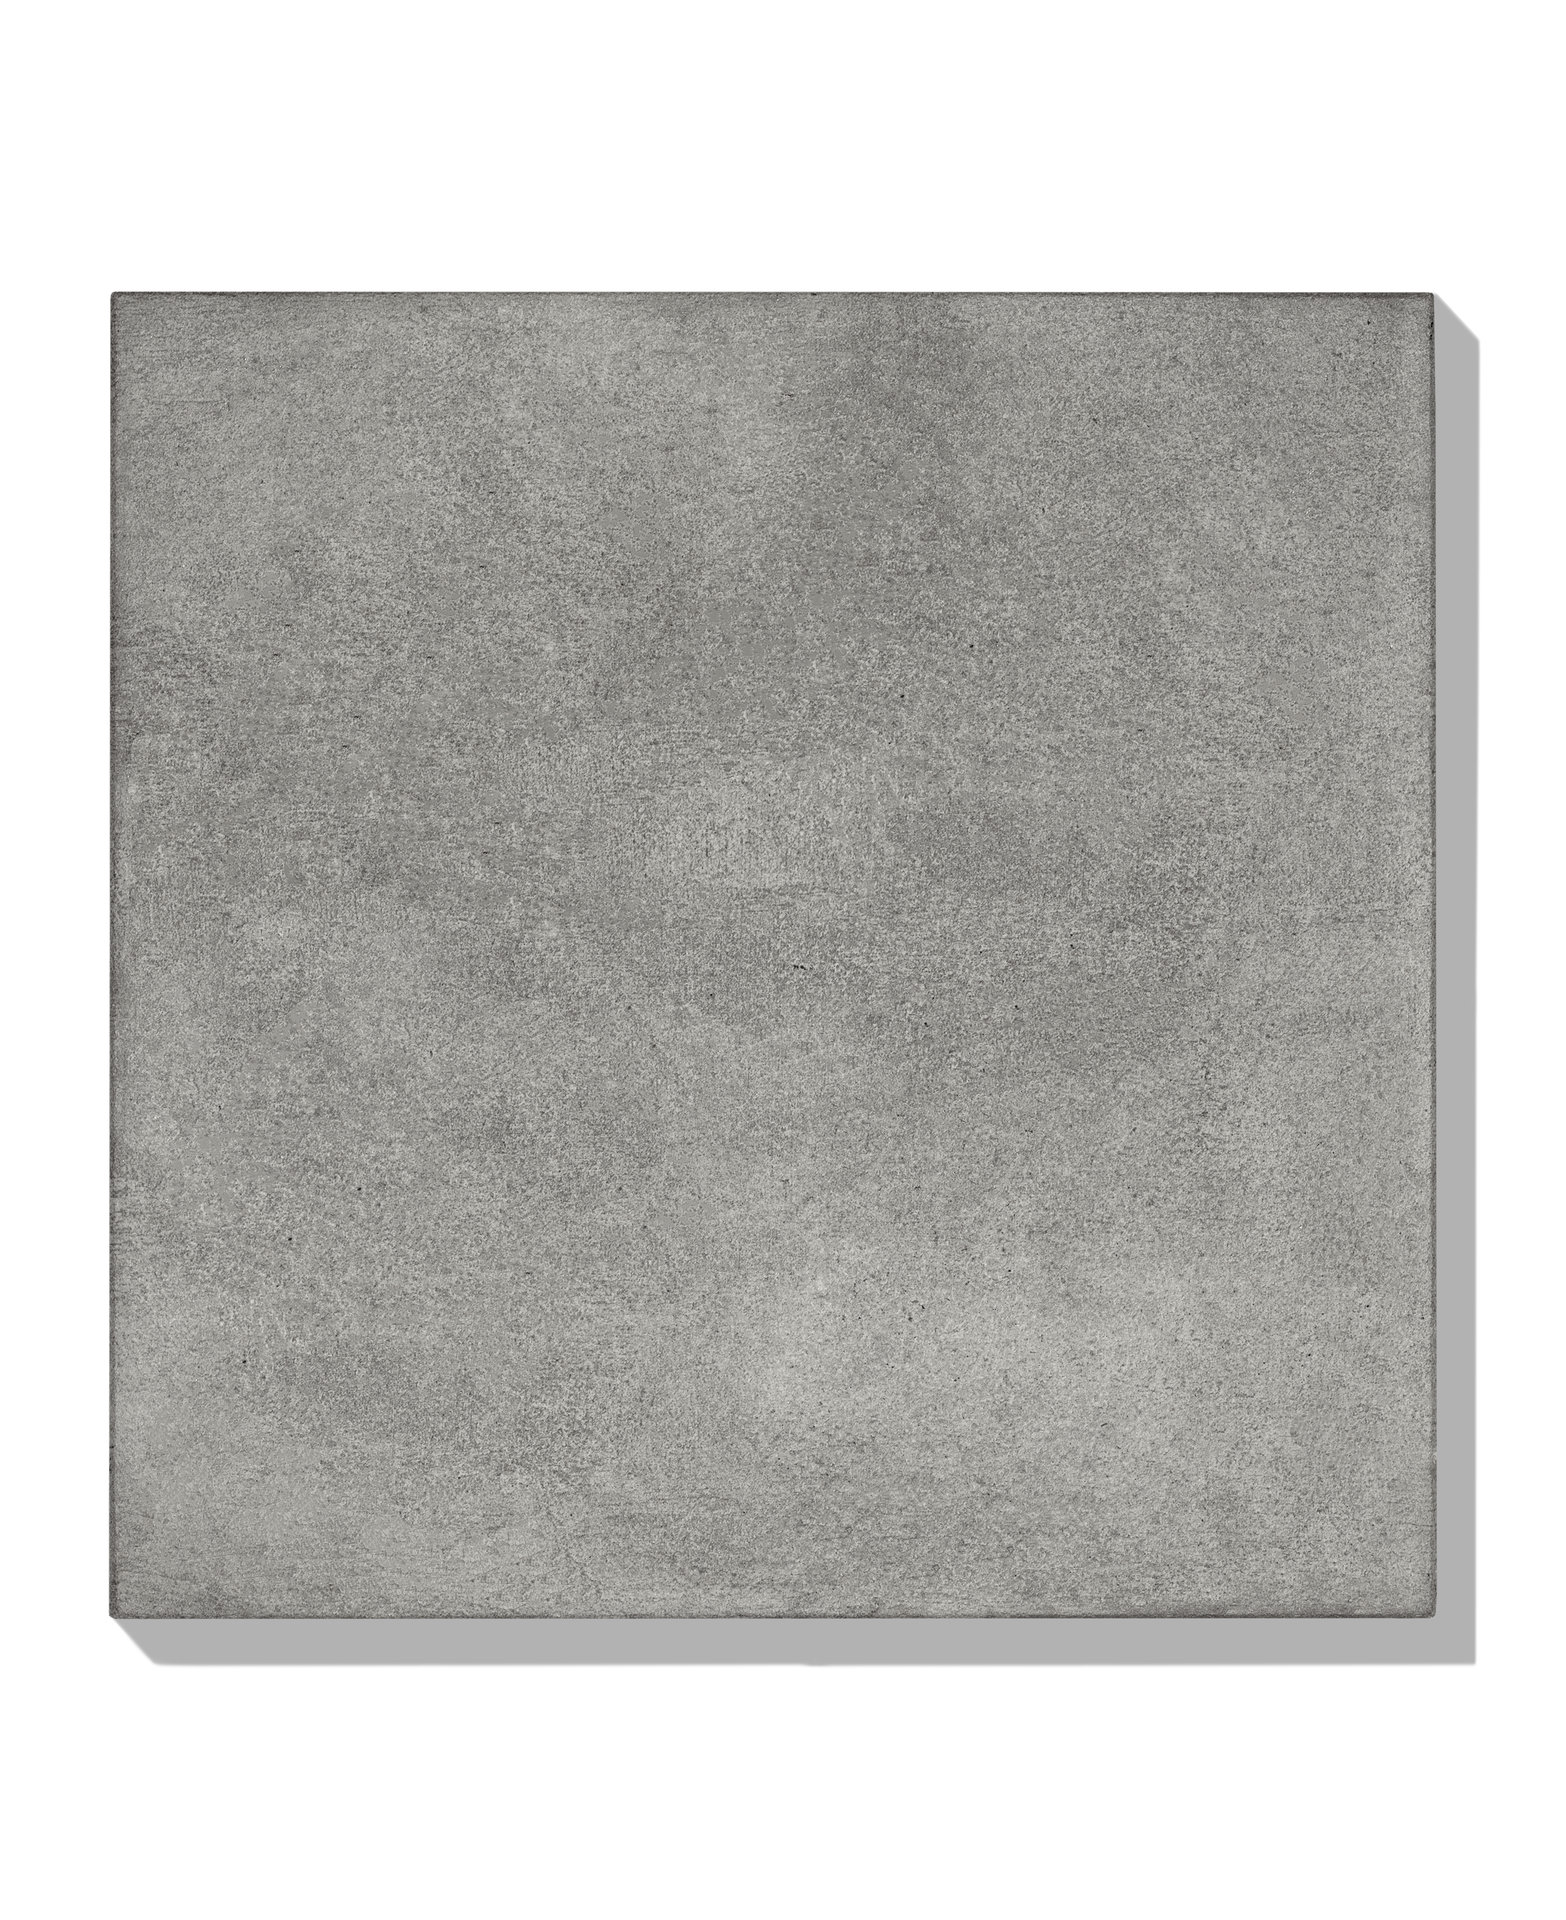 Terrassenplatte in Farbe grau